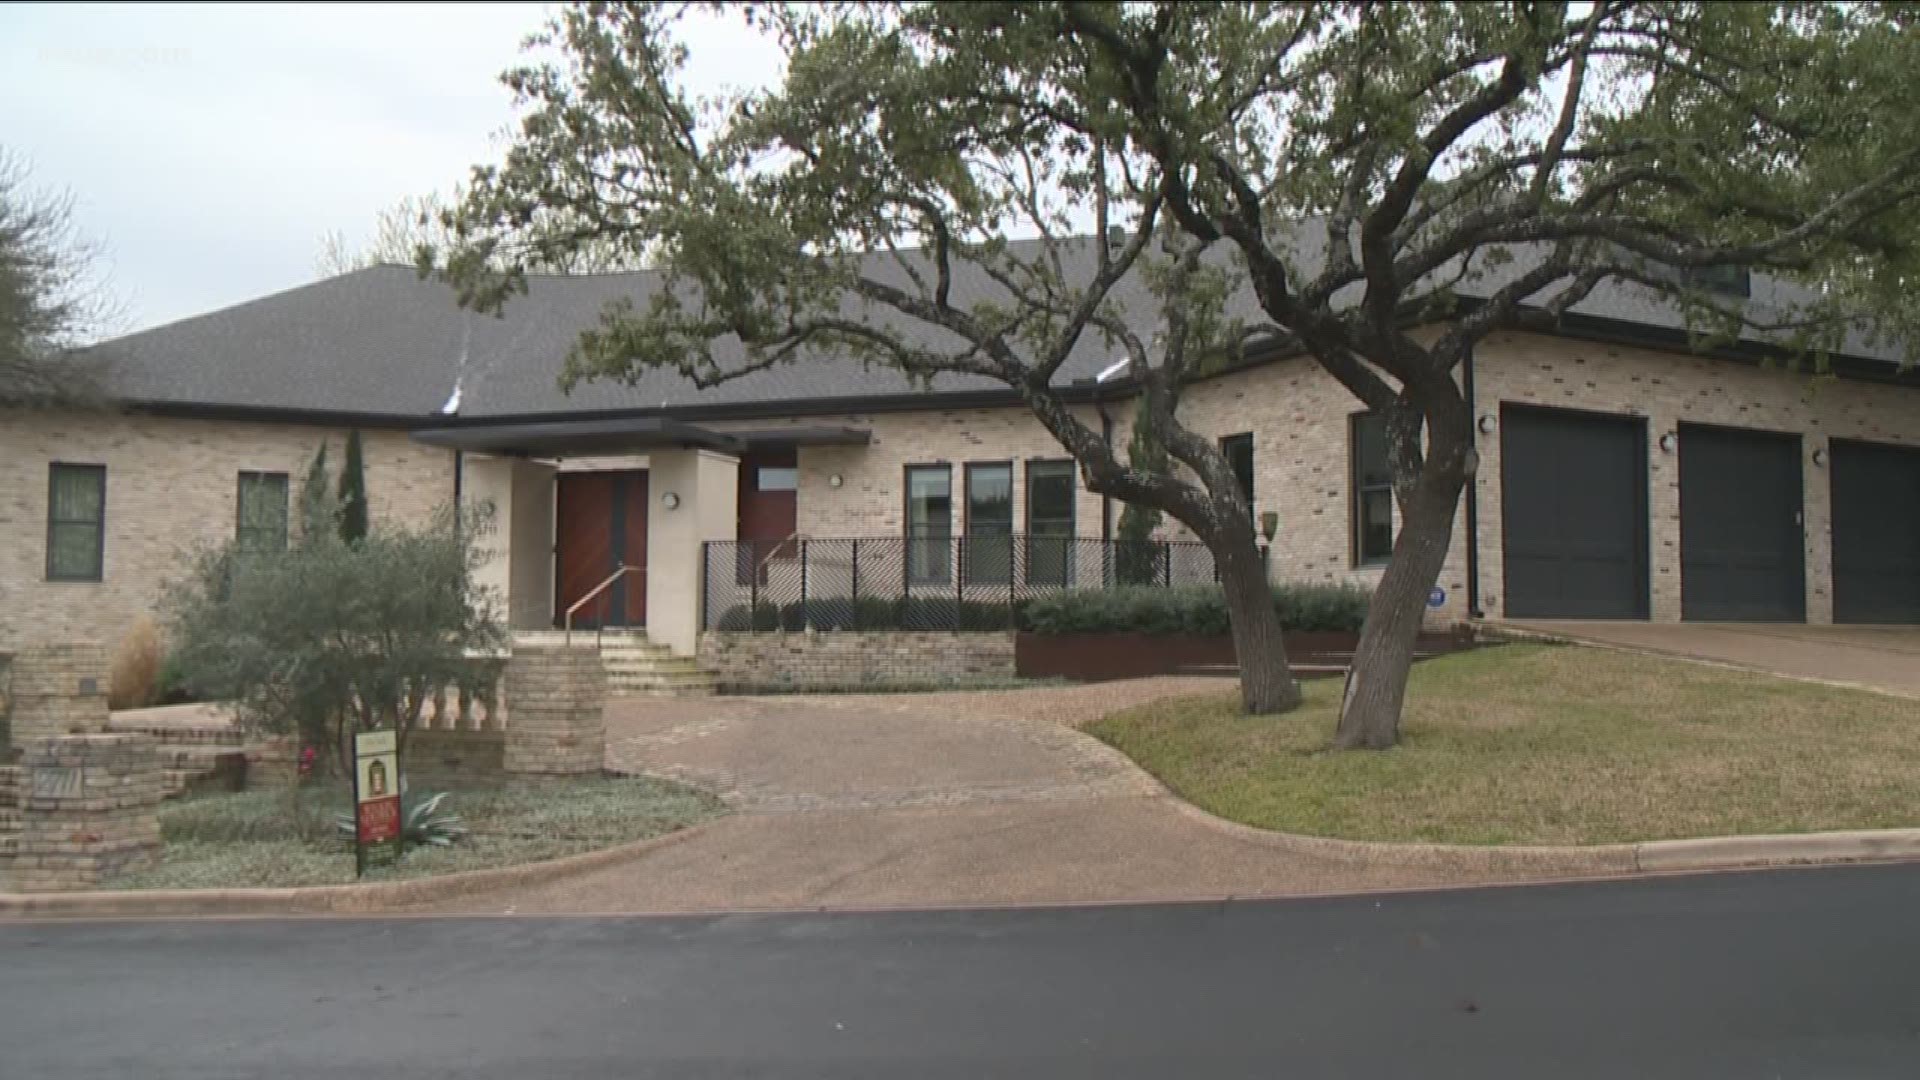 Real Estate site Trulia announced Barton Creek as Austin's first official million dollar neighborhood.